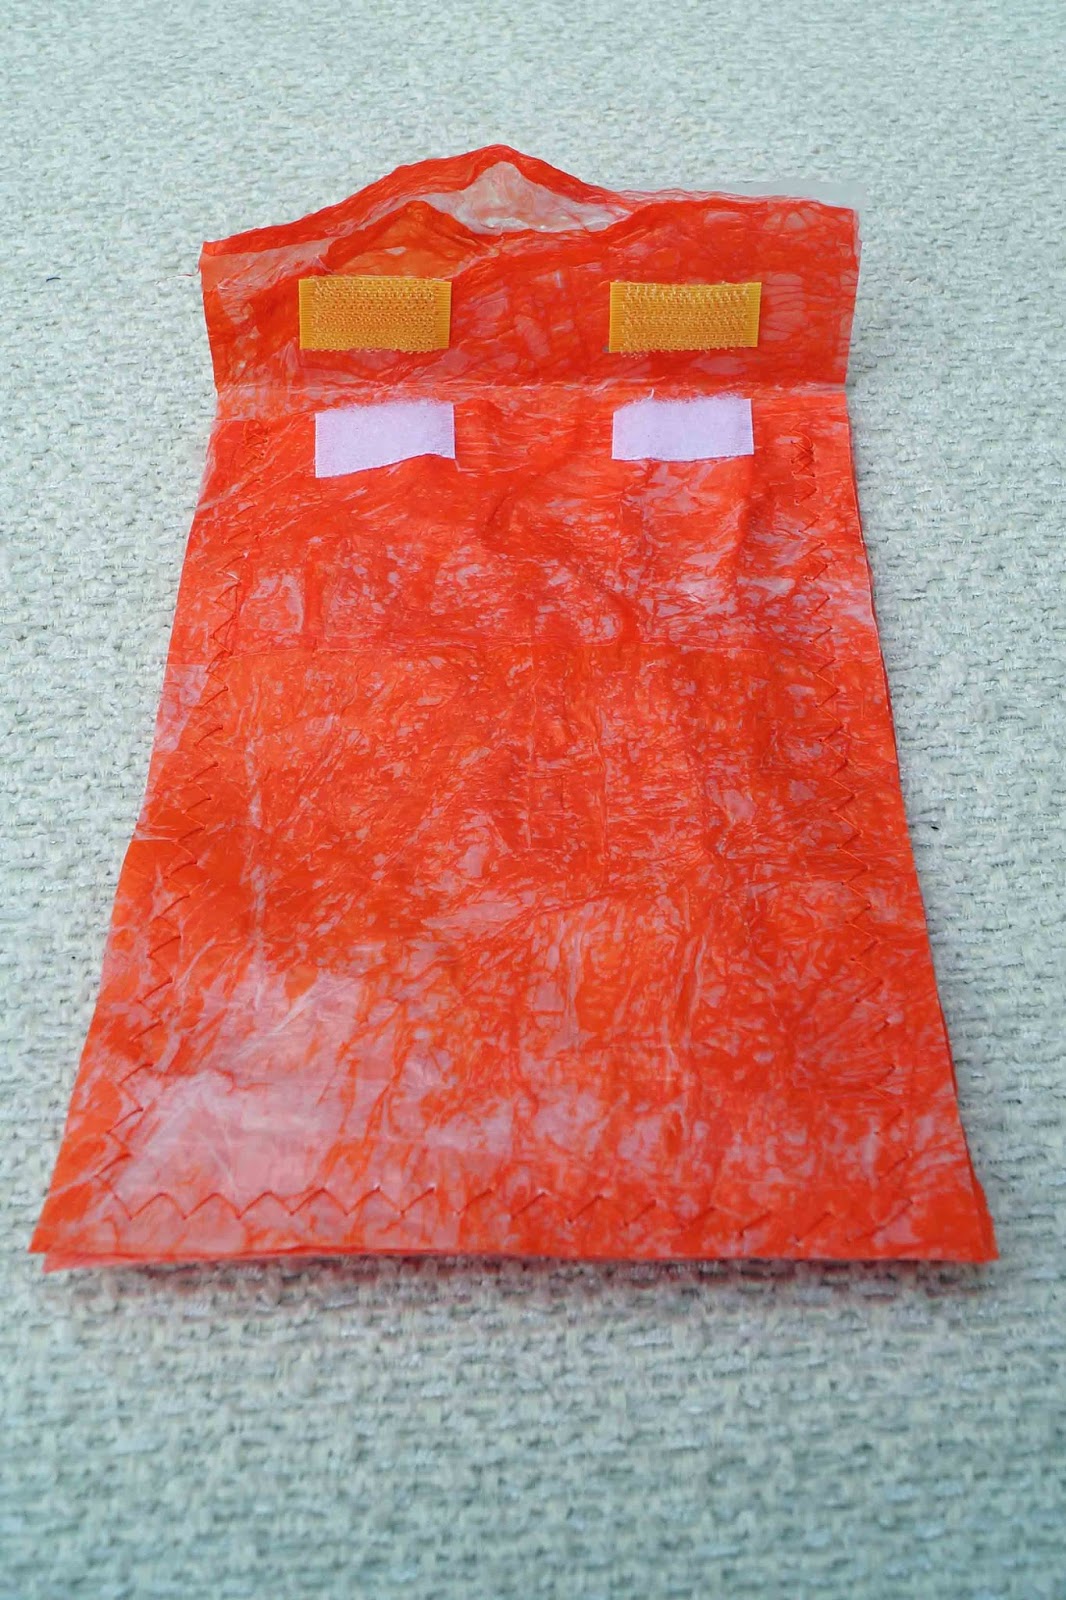 DIY O.R. Apron using plastic bag